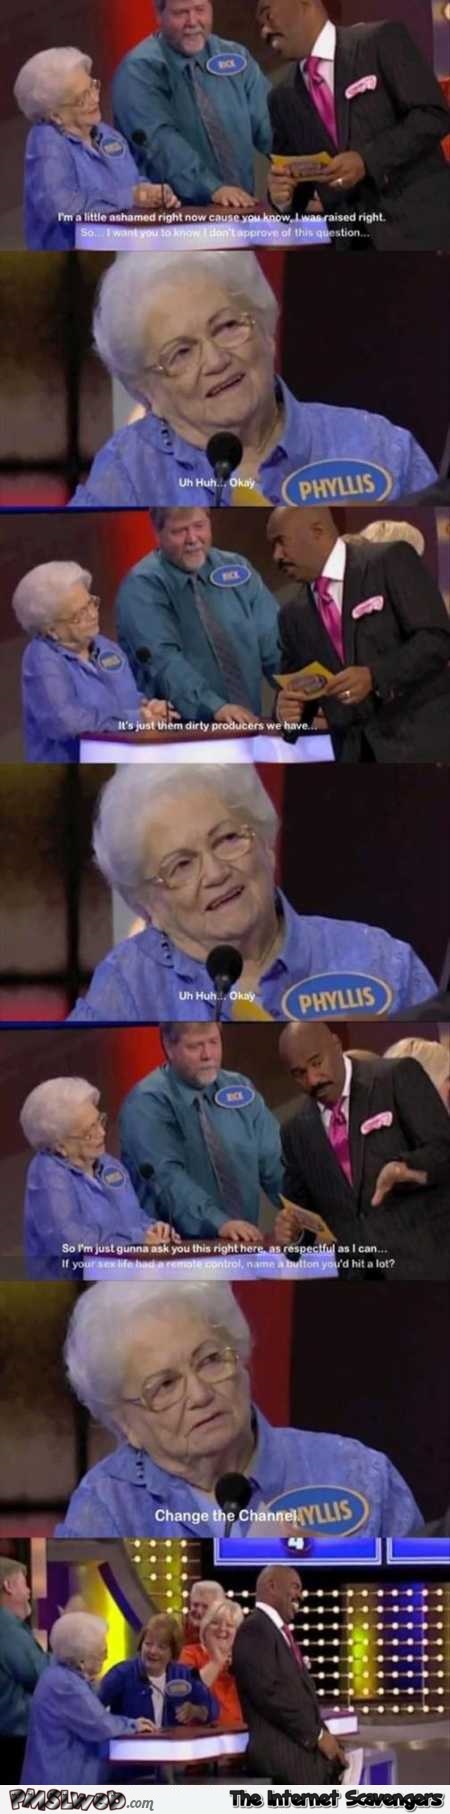 Funny grandma on family feud @PMSLweb.com